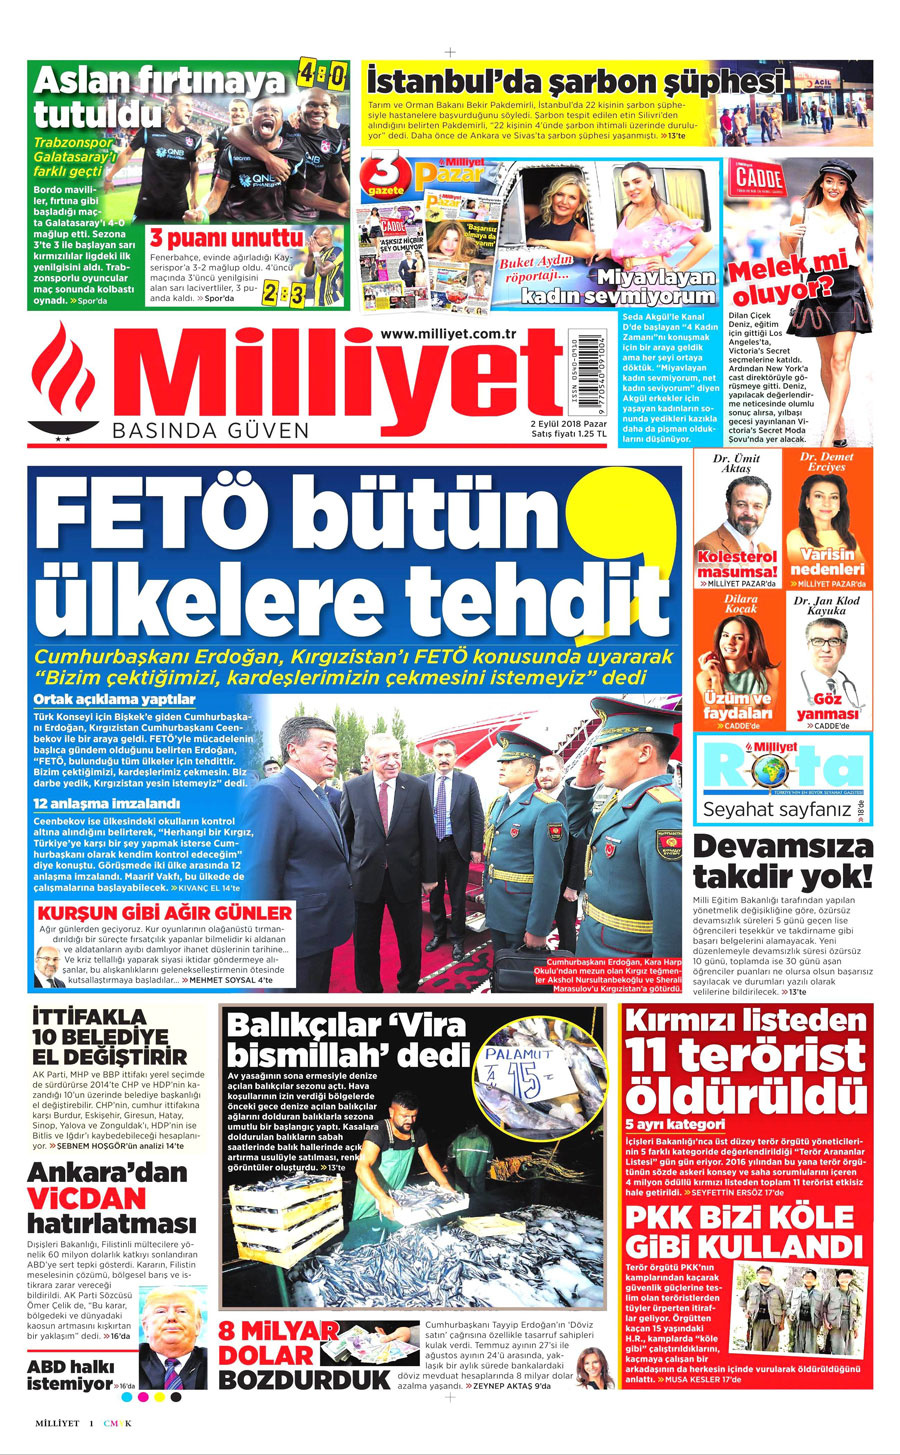 Gazete manşetleri 2 Eylül 2018 Sabah - Hürriyet - Milliyet - Sözcü